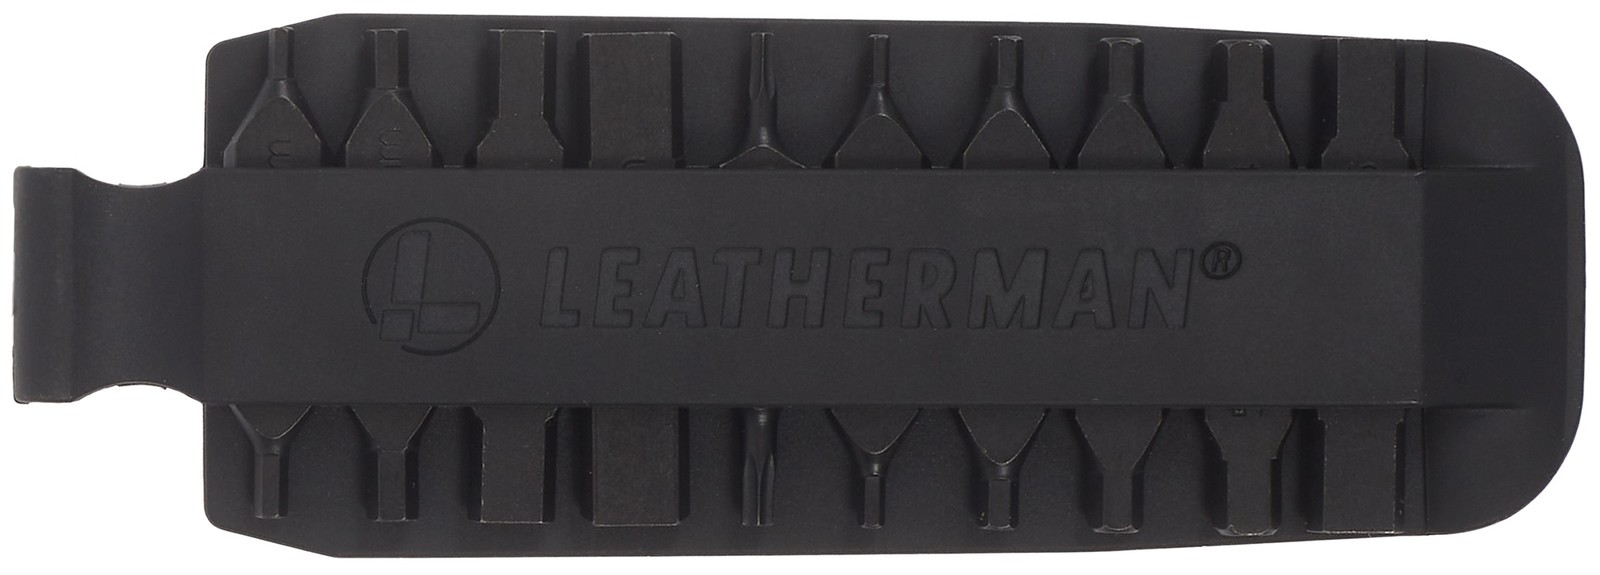 Leatherman Bit Kit #2